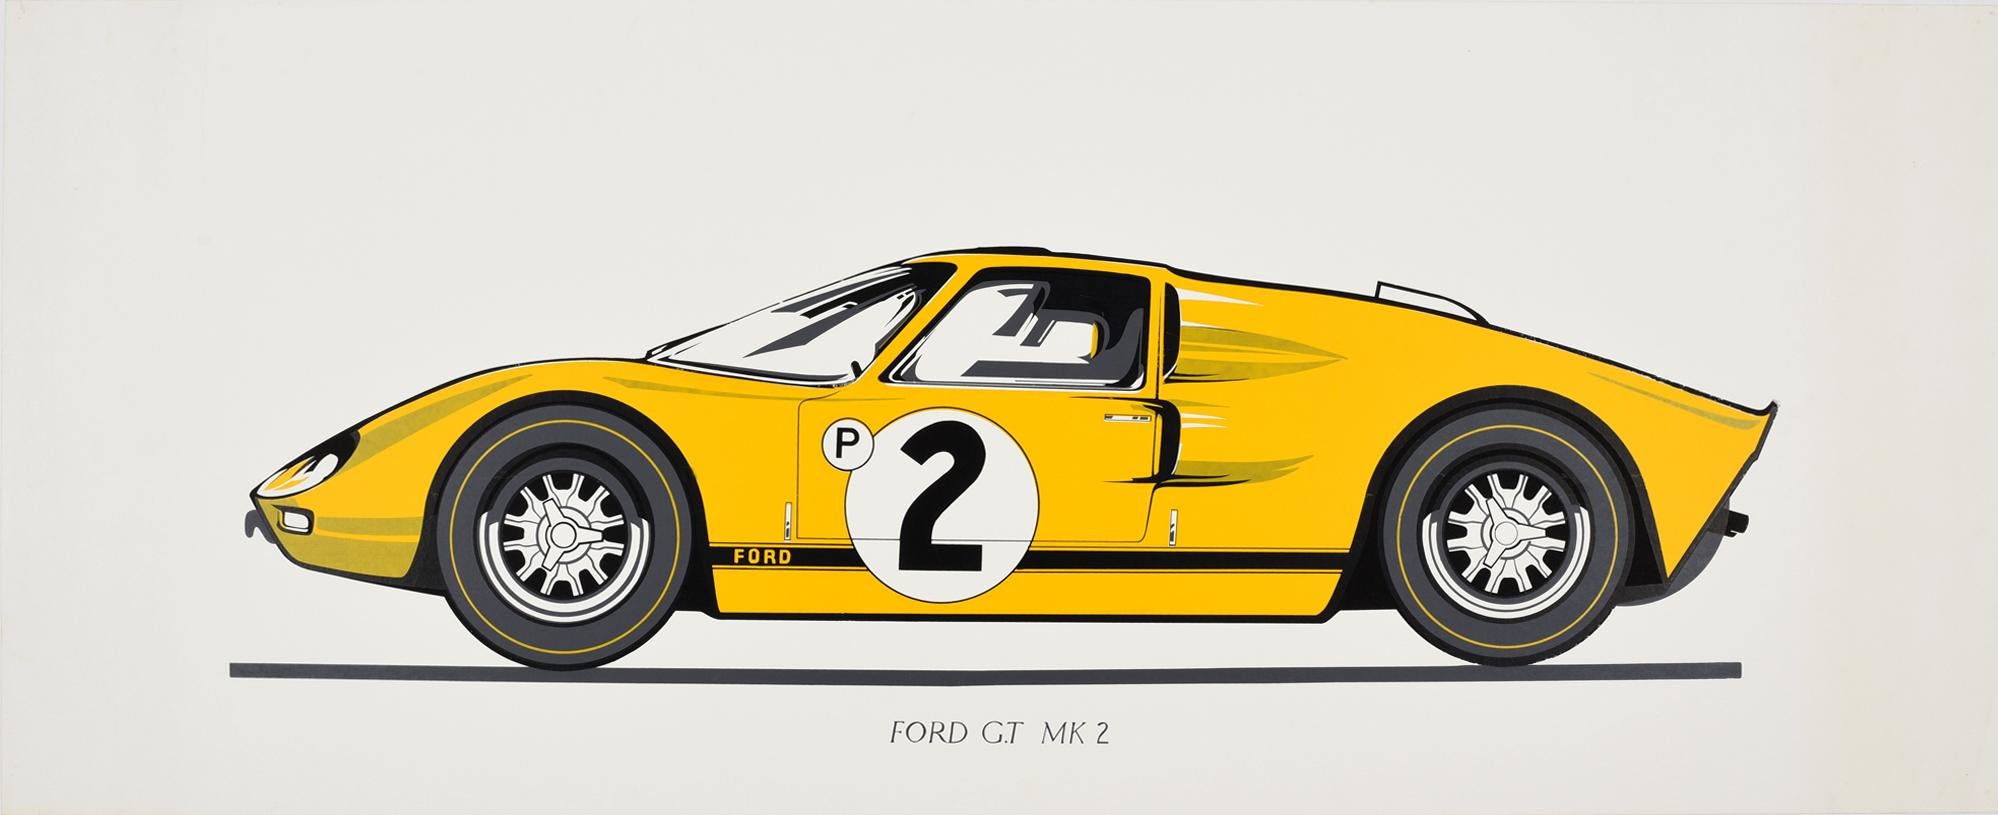 Unknown Print - Original Vintage Poster Ford GT MK 2 Racing Car Motor Sport 24 Hours Le Mans Win